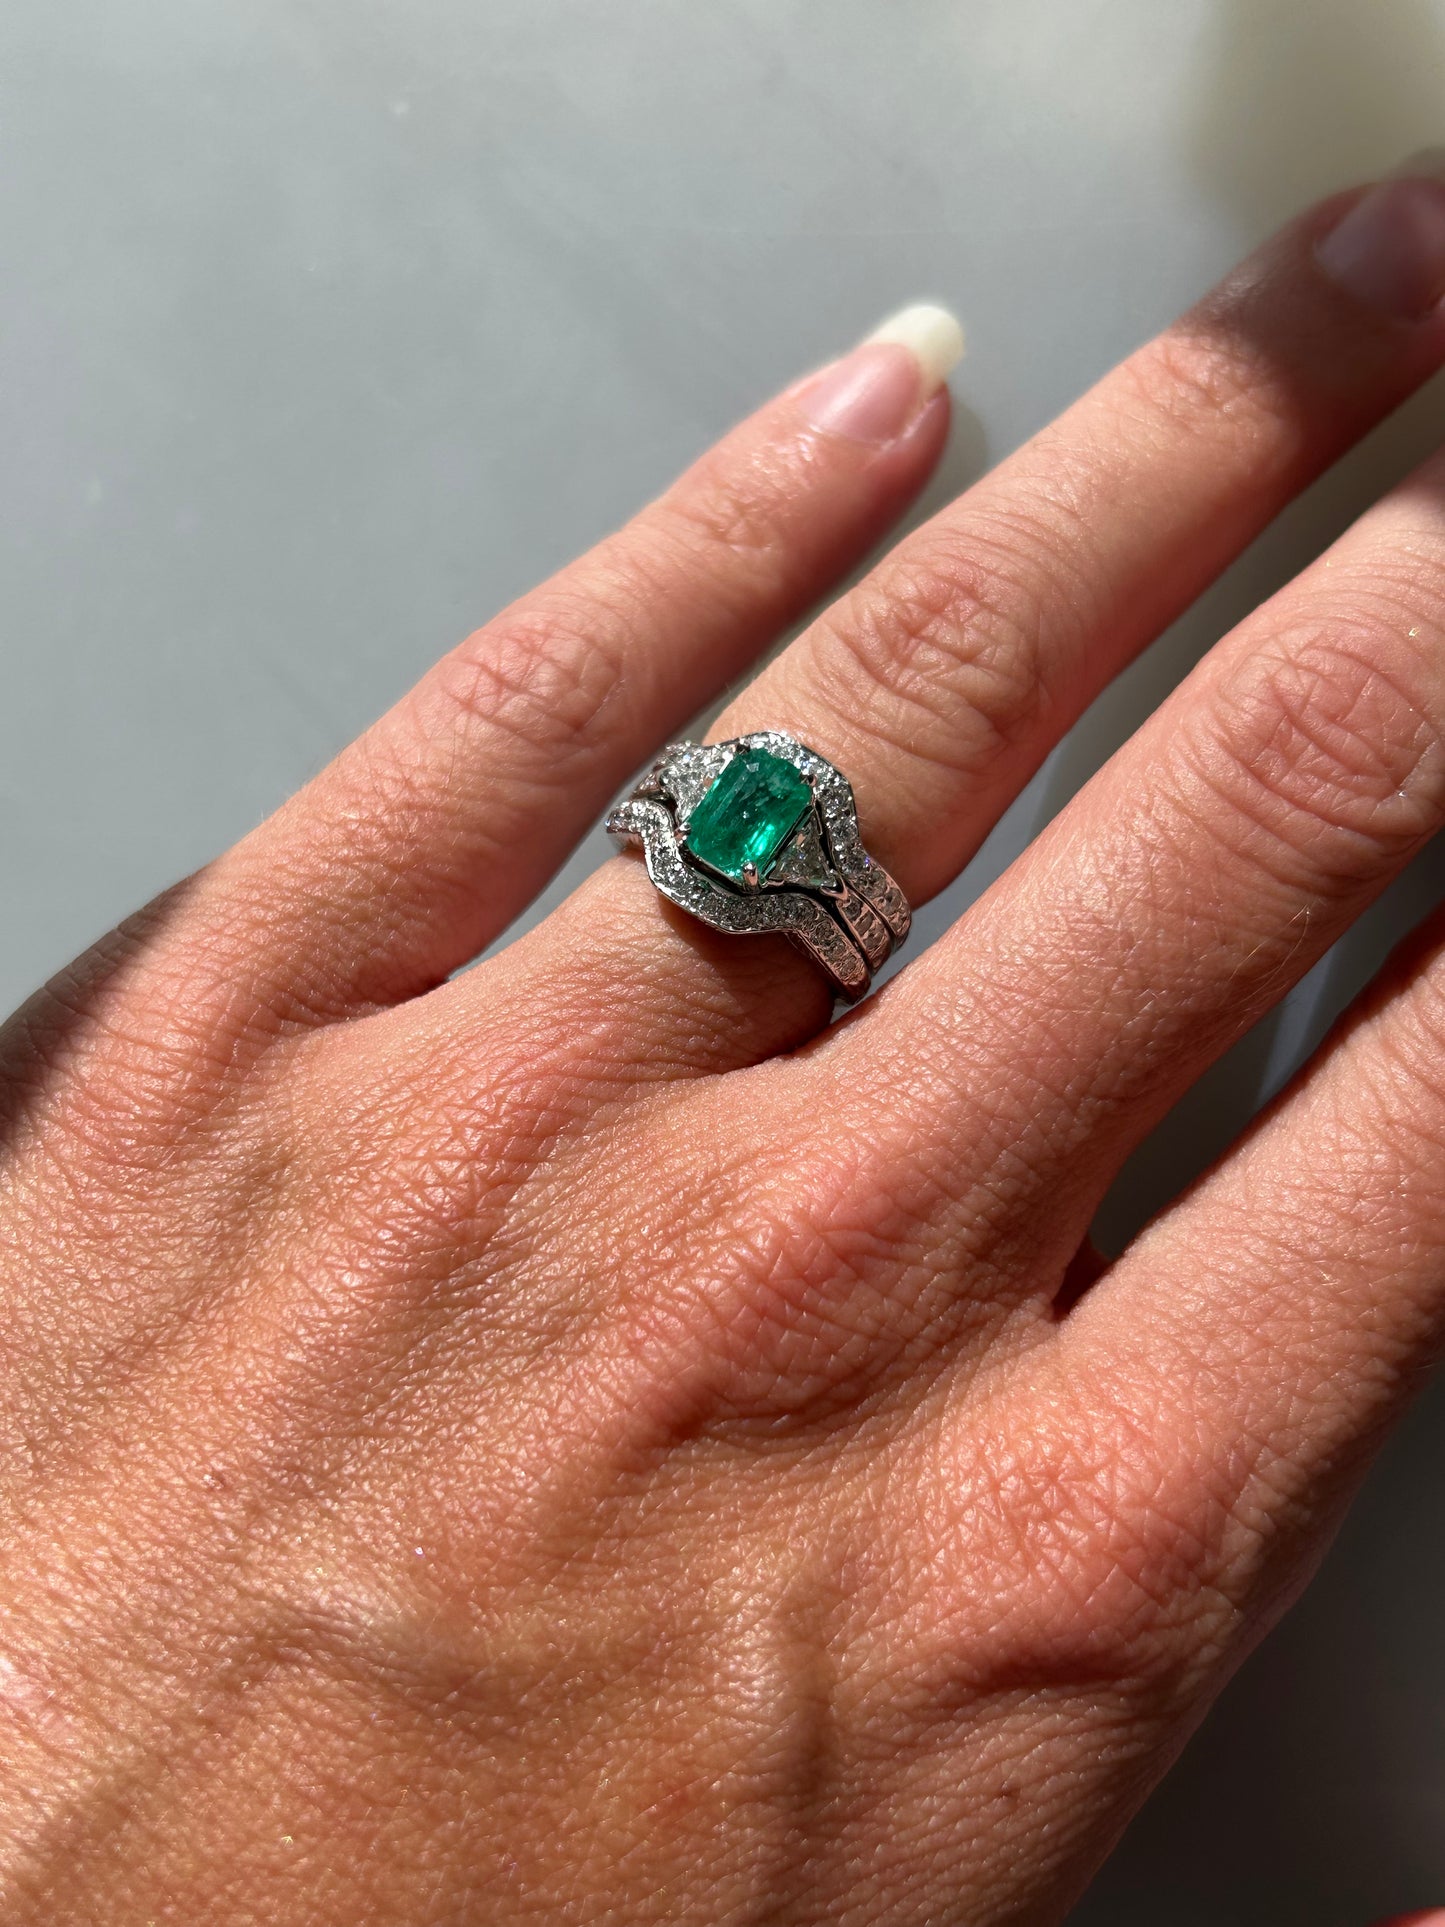 14ct emerald and diamond ring set